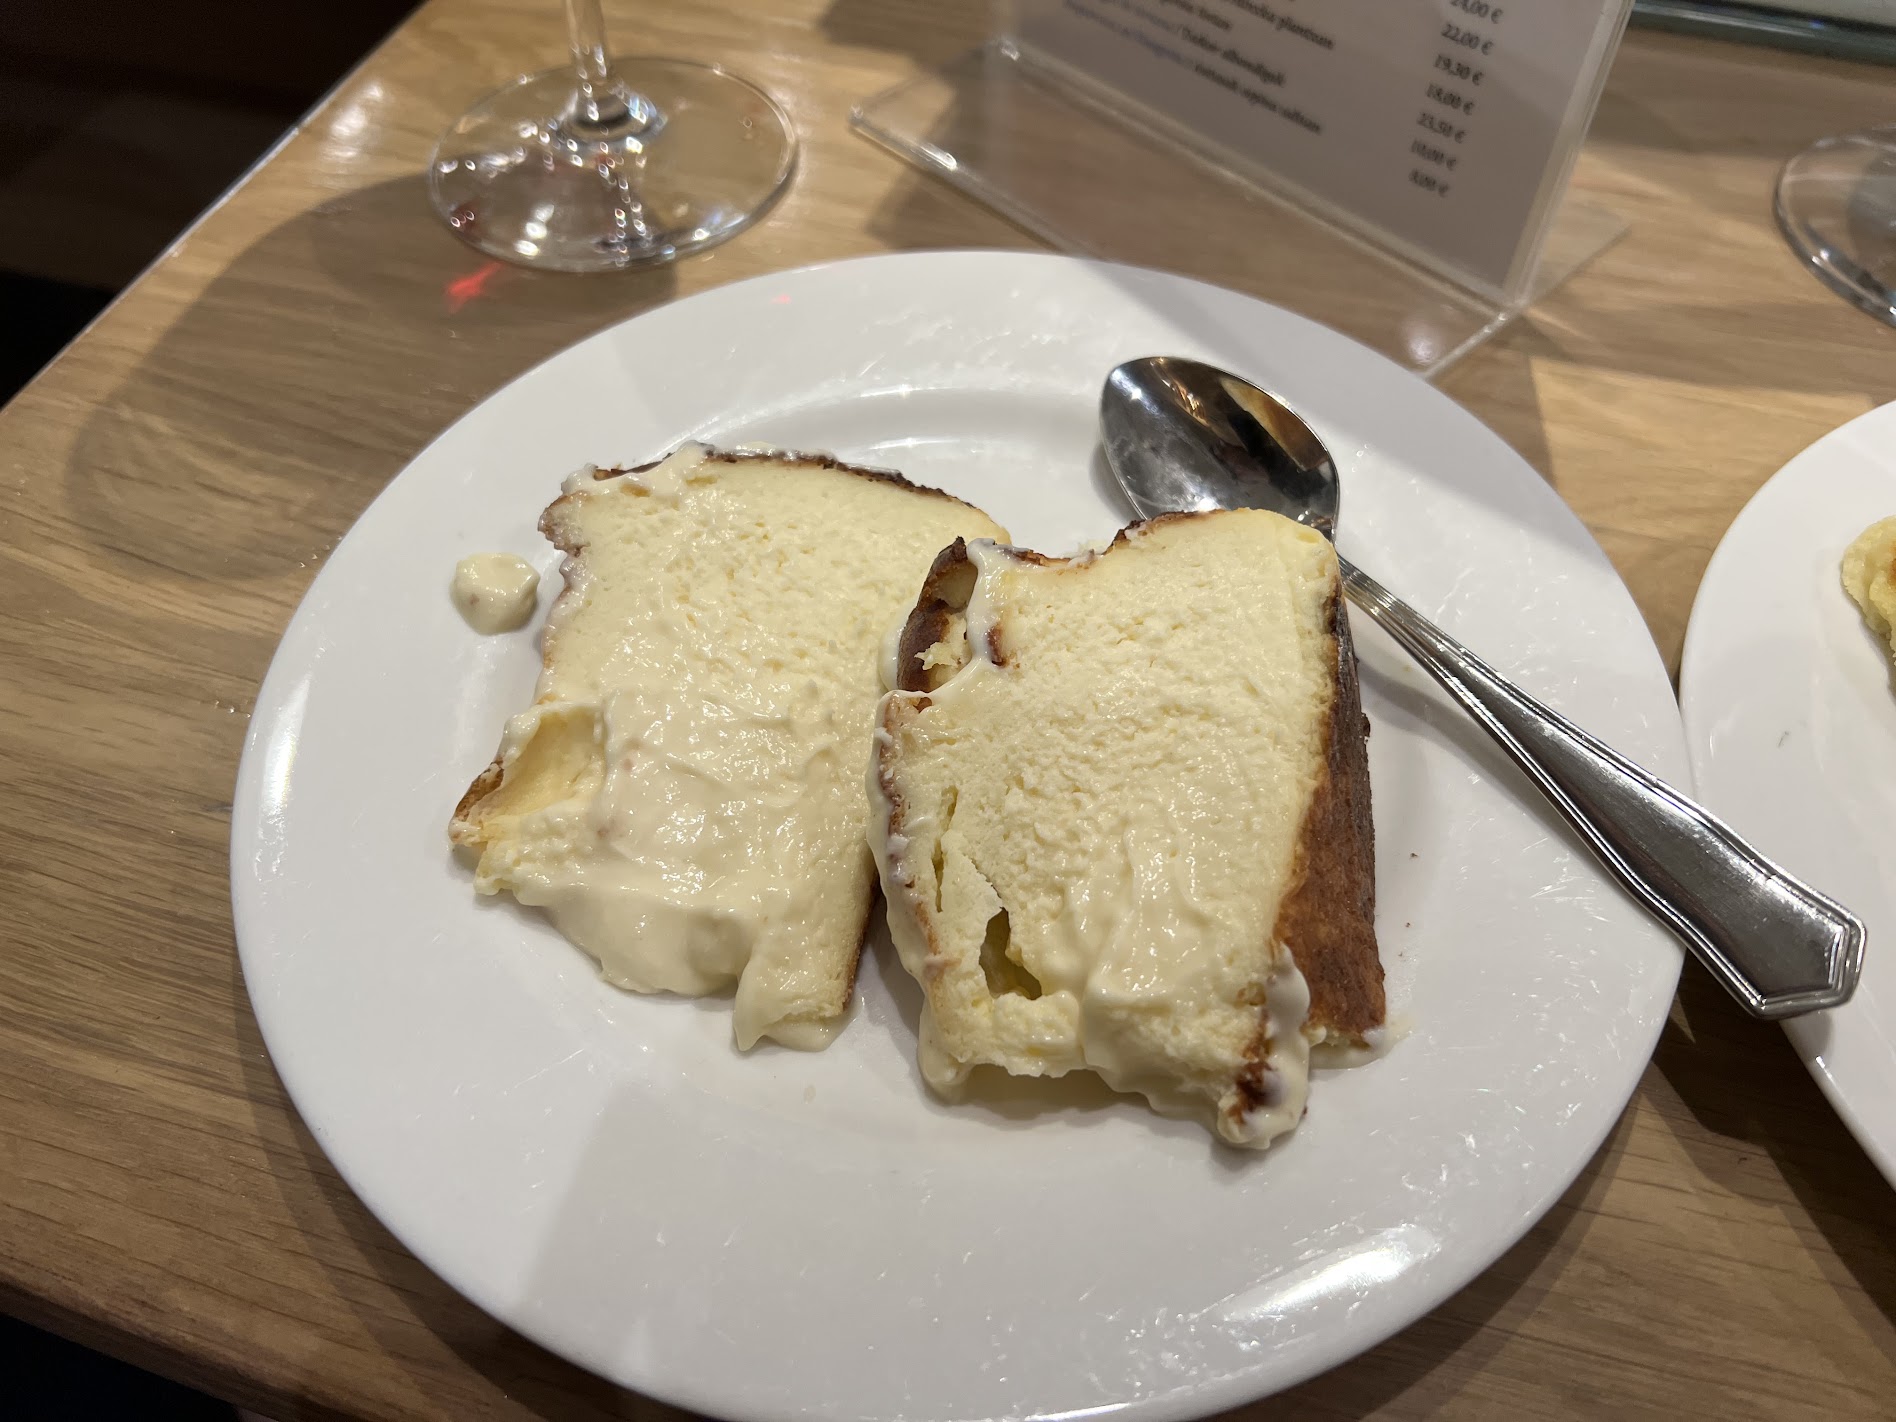 La Vina basque cheesecake